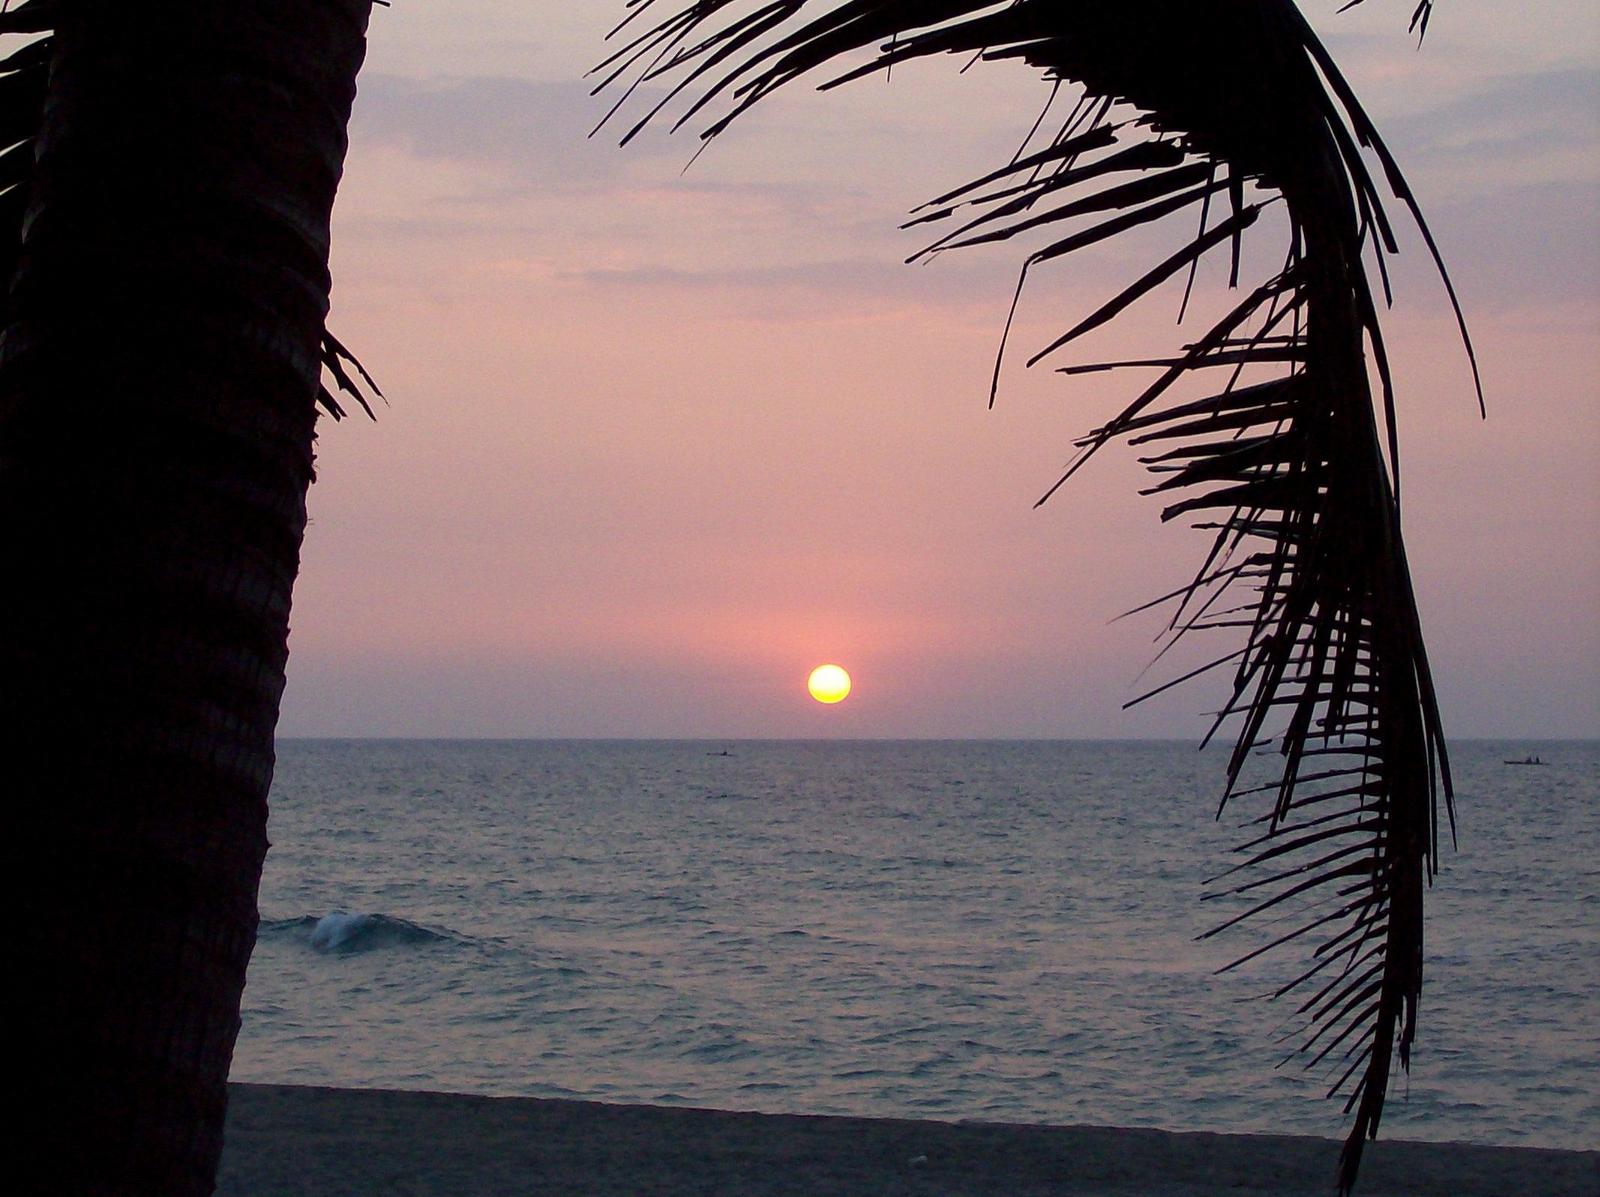 Sunset German Beach Resort - Luzon